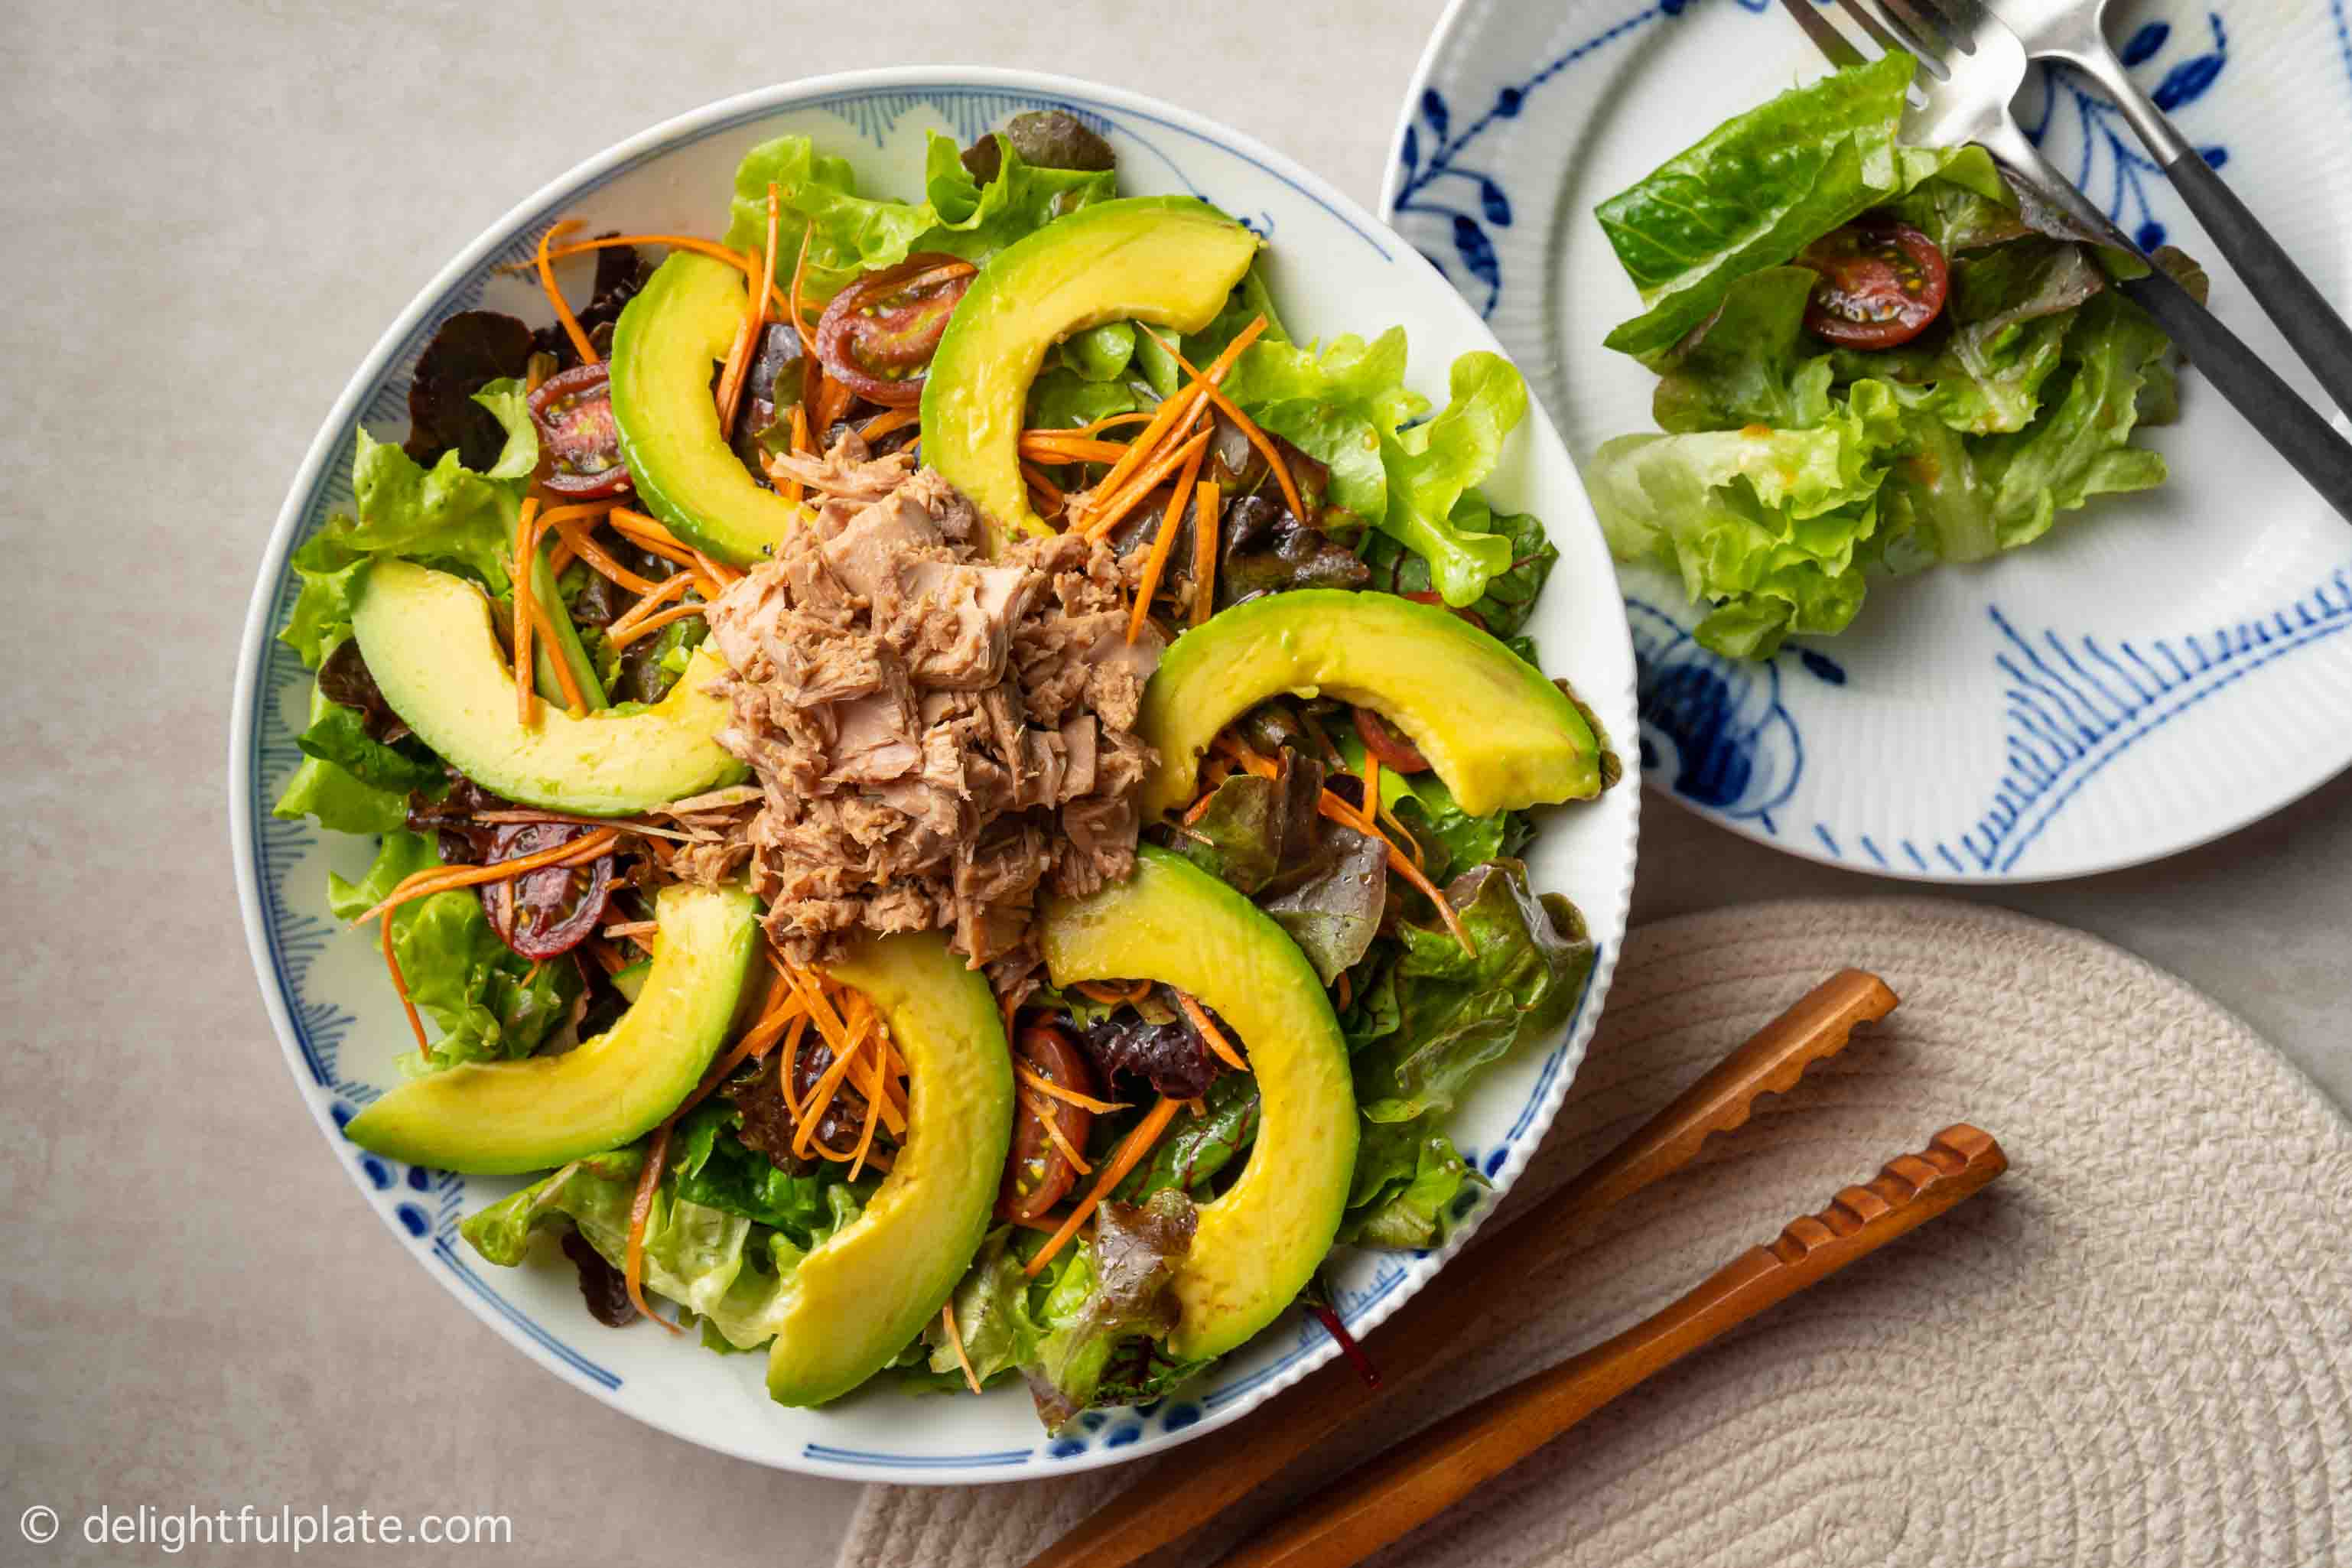 a plate of mayo-free avocado tuna salad